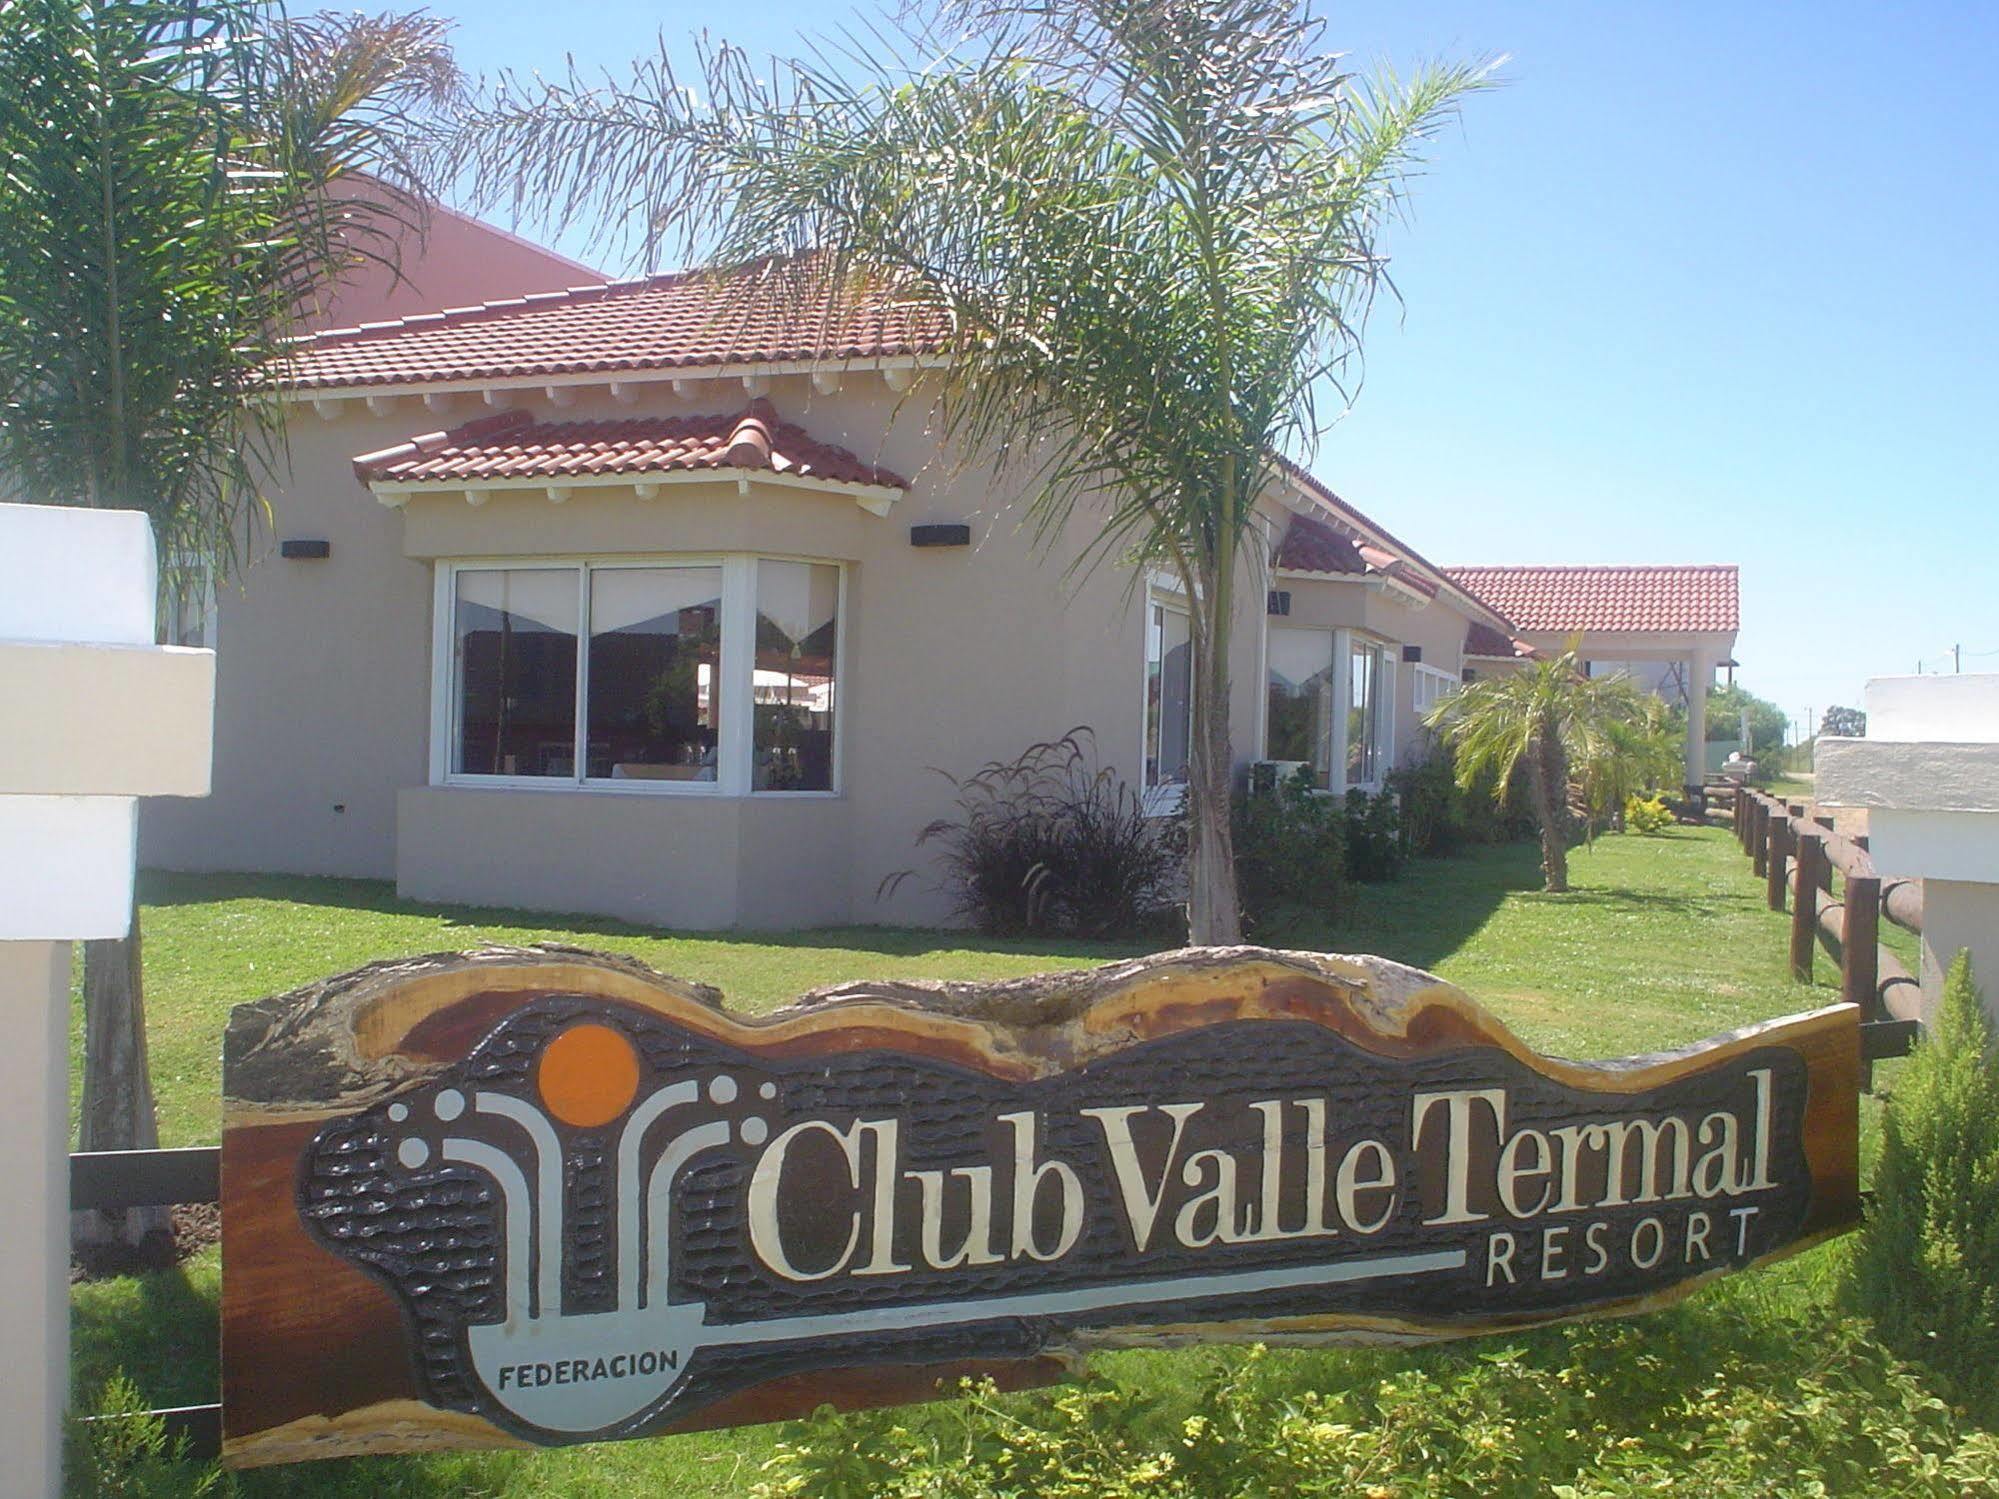 Club Valle Termal Resort Federacion Exterior photo